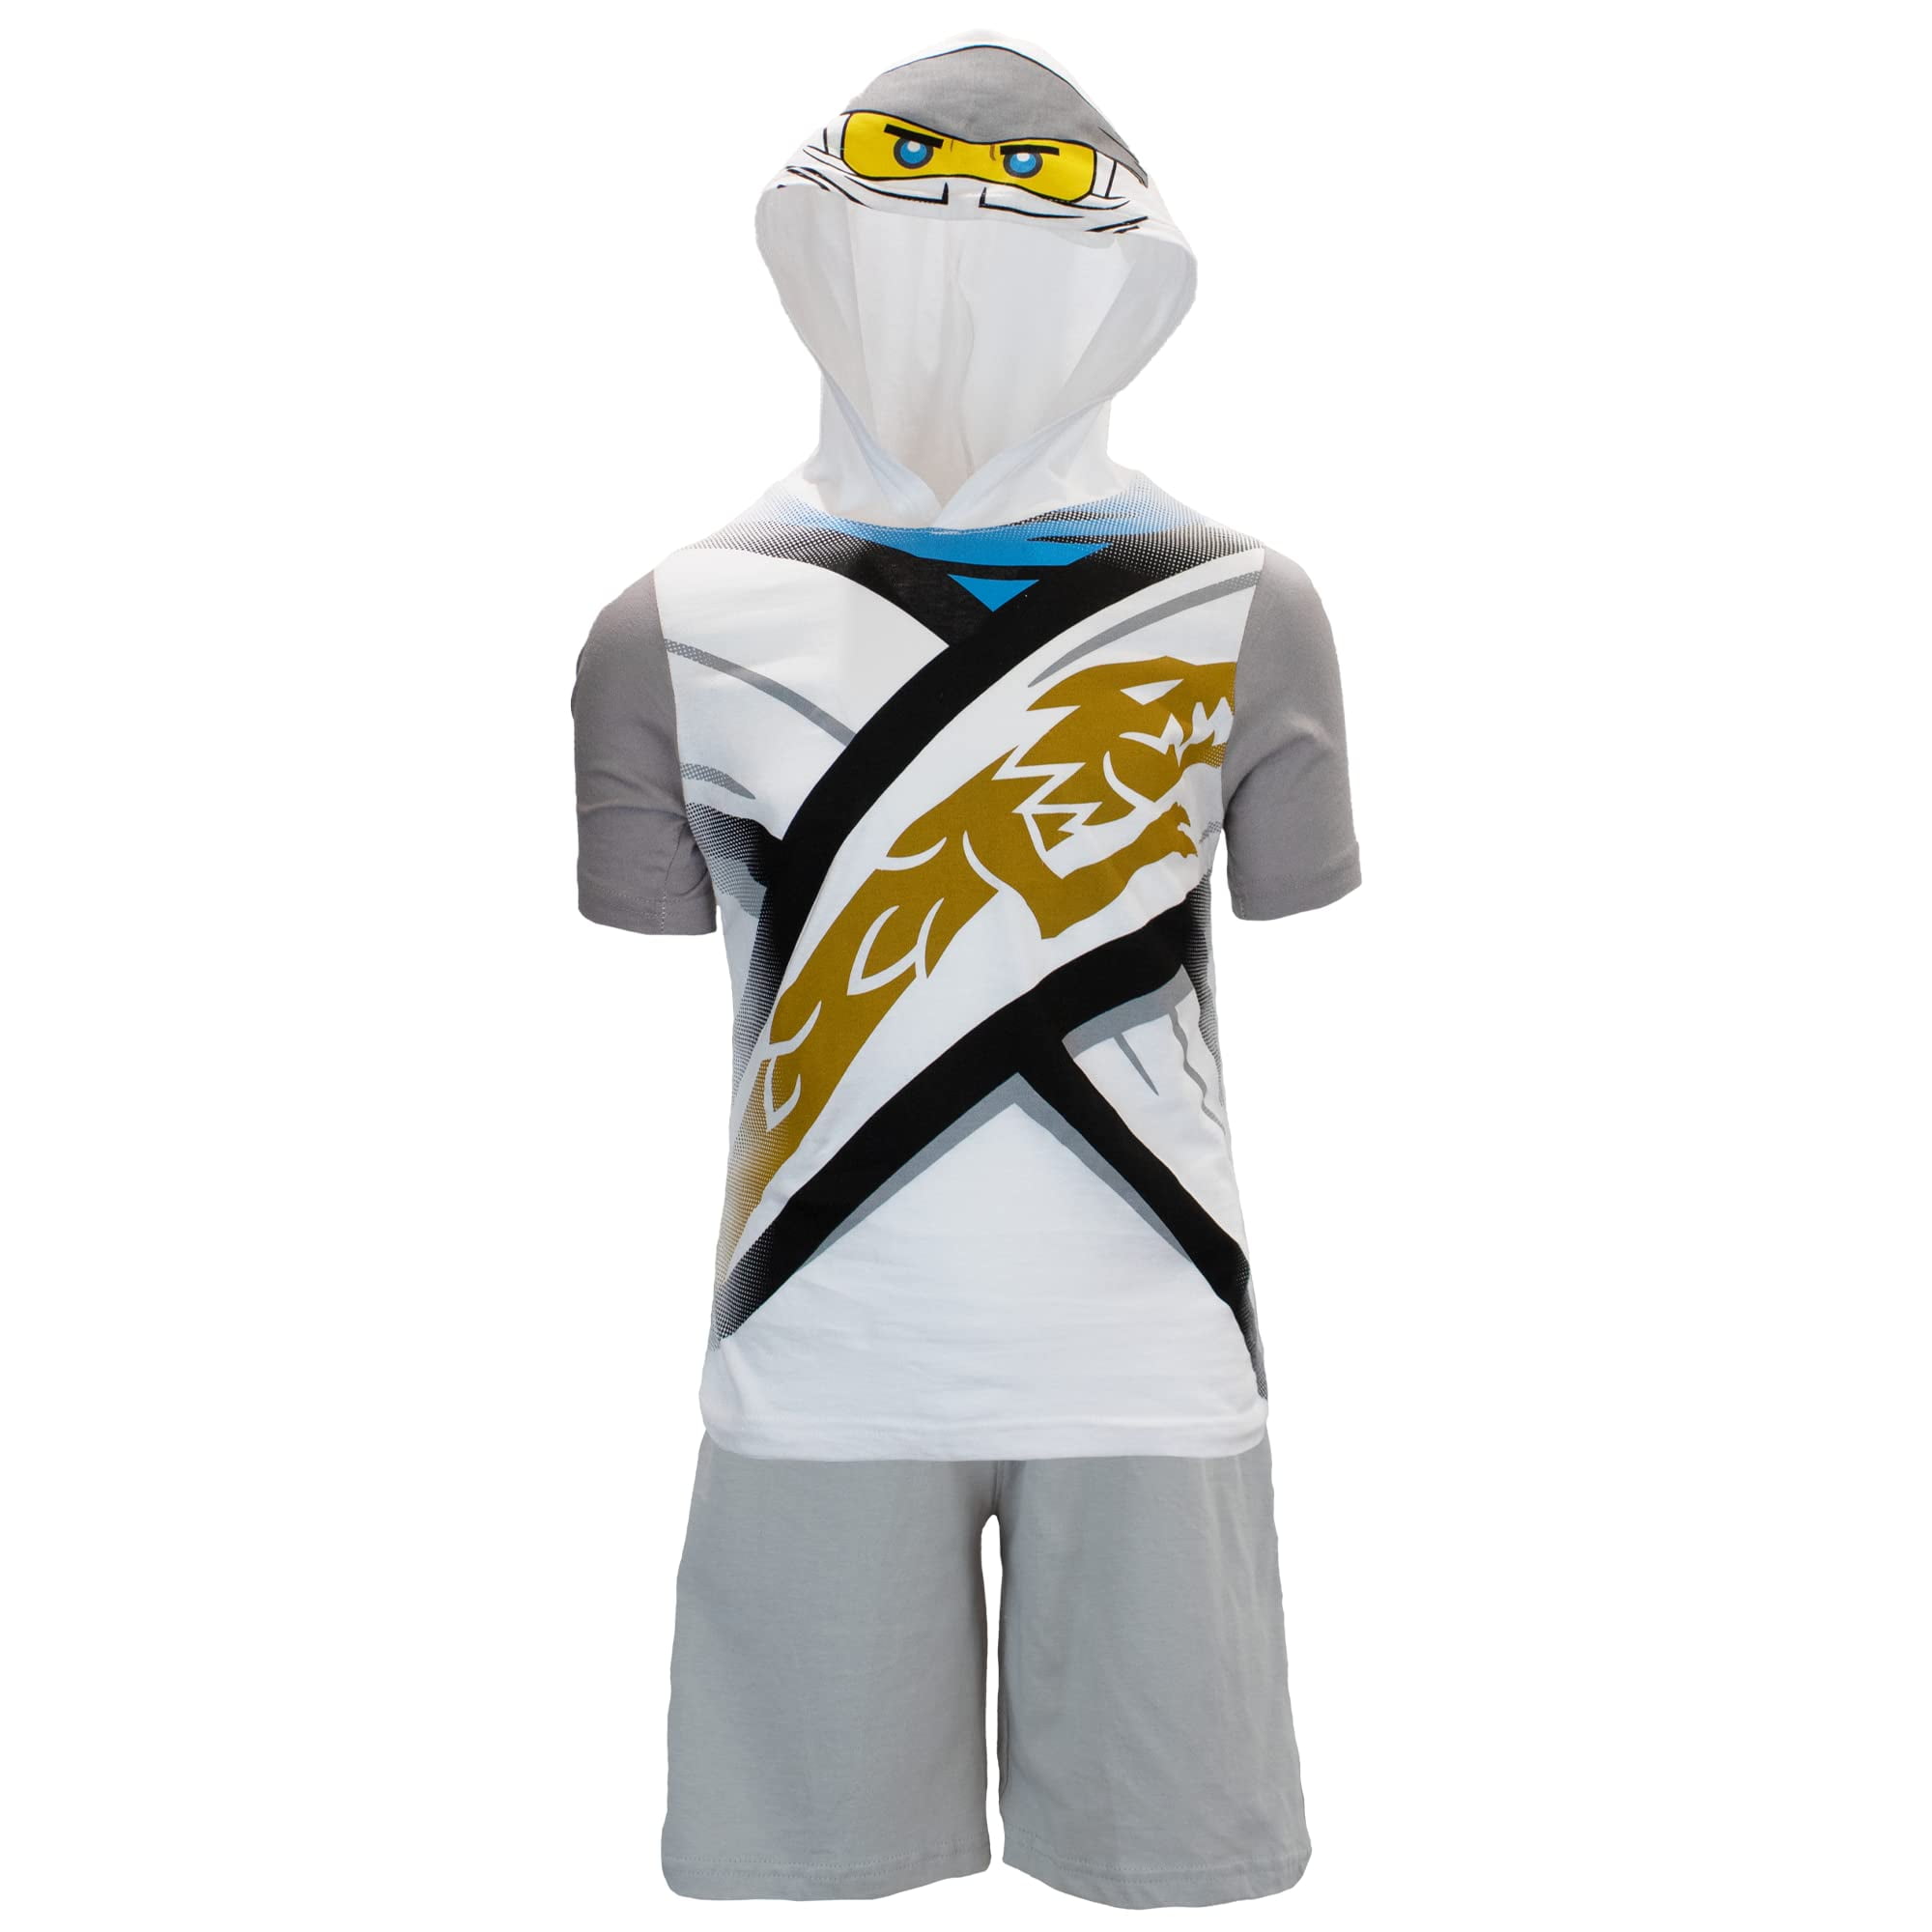 LEGO Ninjago Boys Ninjago cosplay Short and Matching cosplay Hooded T-Shirt  (White,Sizes 4-16) 